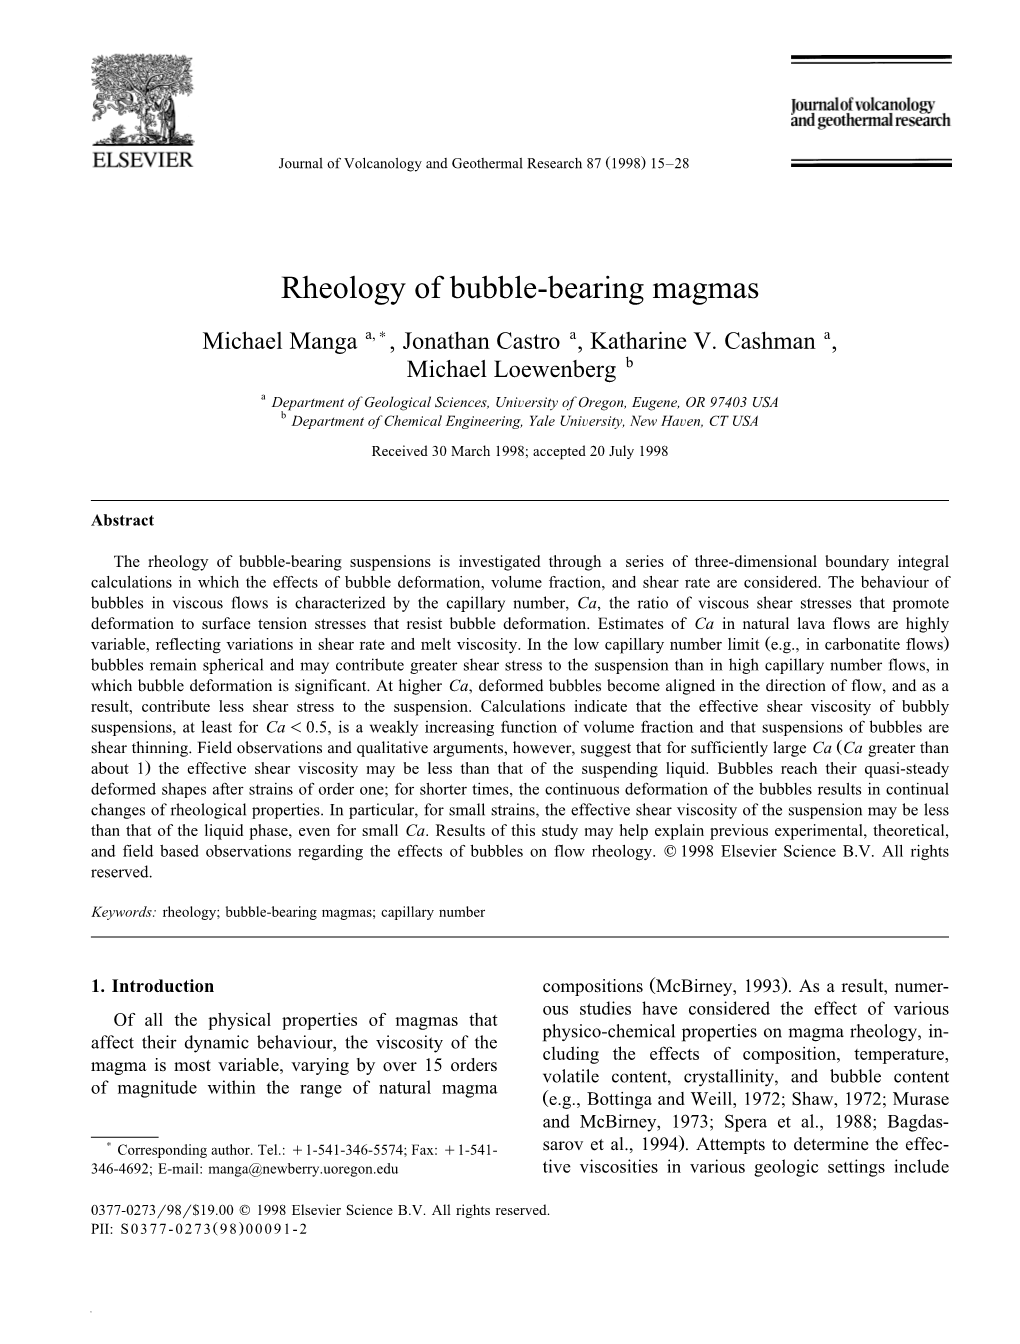 Rheology of Bubble-Bearing Magmas